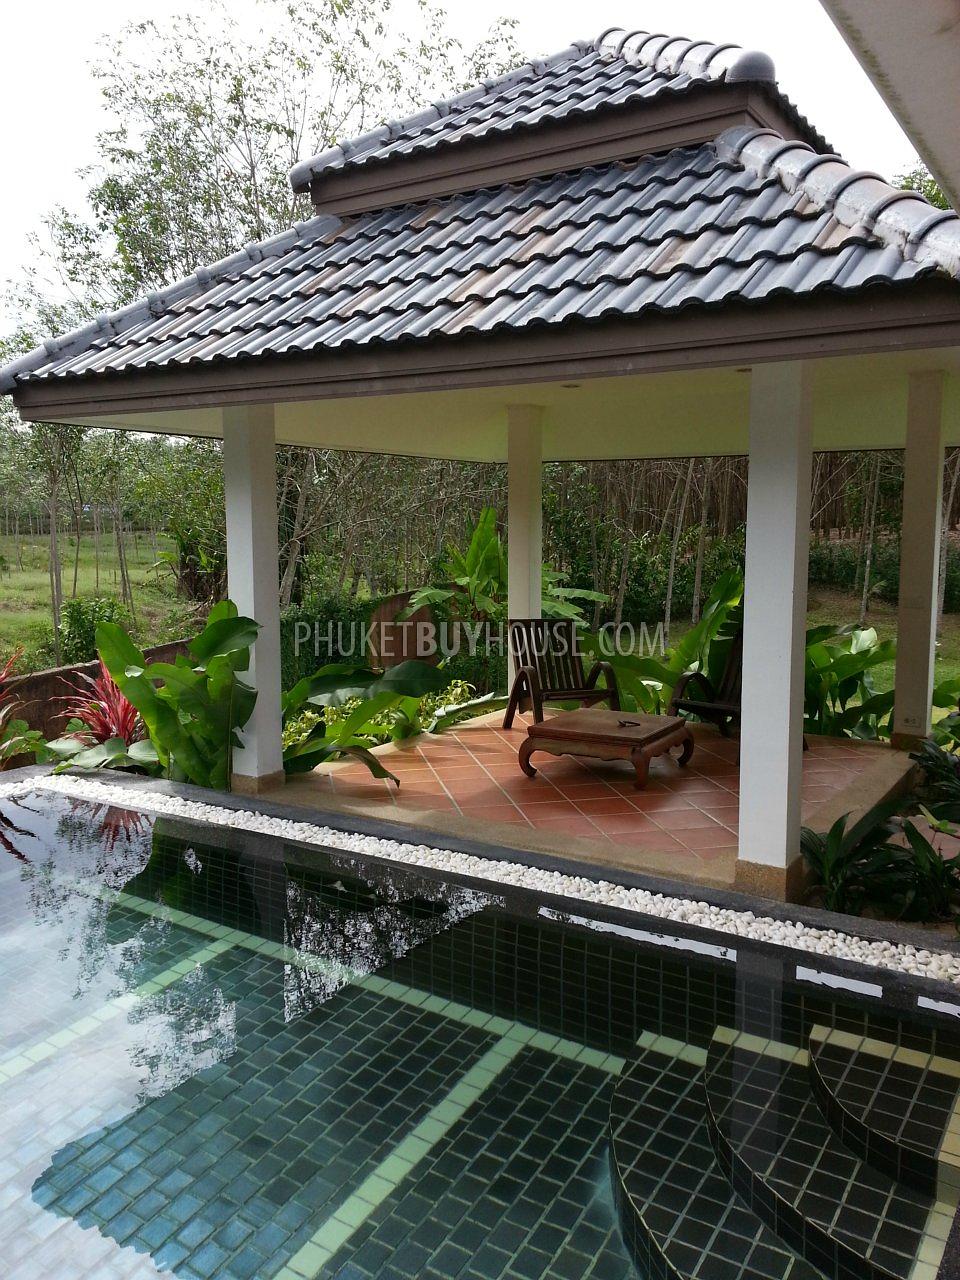 EAS3910: Hot! 4-bedroom modern pool villa on a 1 rai land plot near PIADS (UWC). Urgent sale!. Photo #33